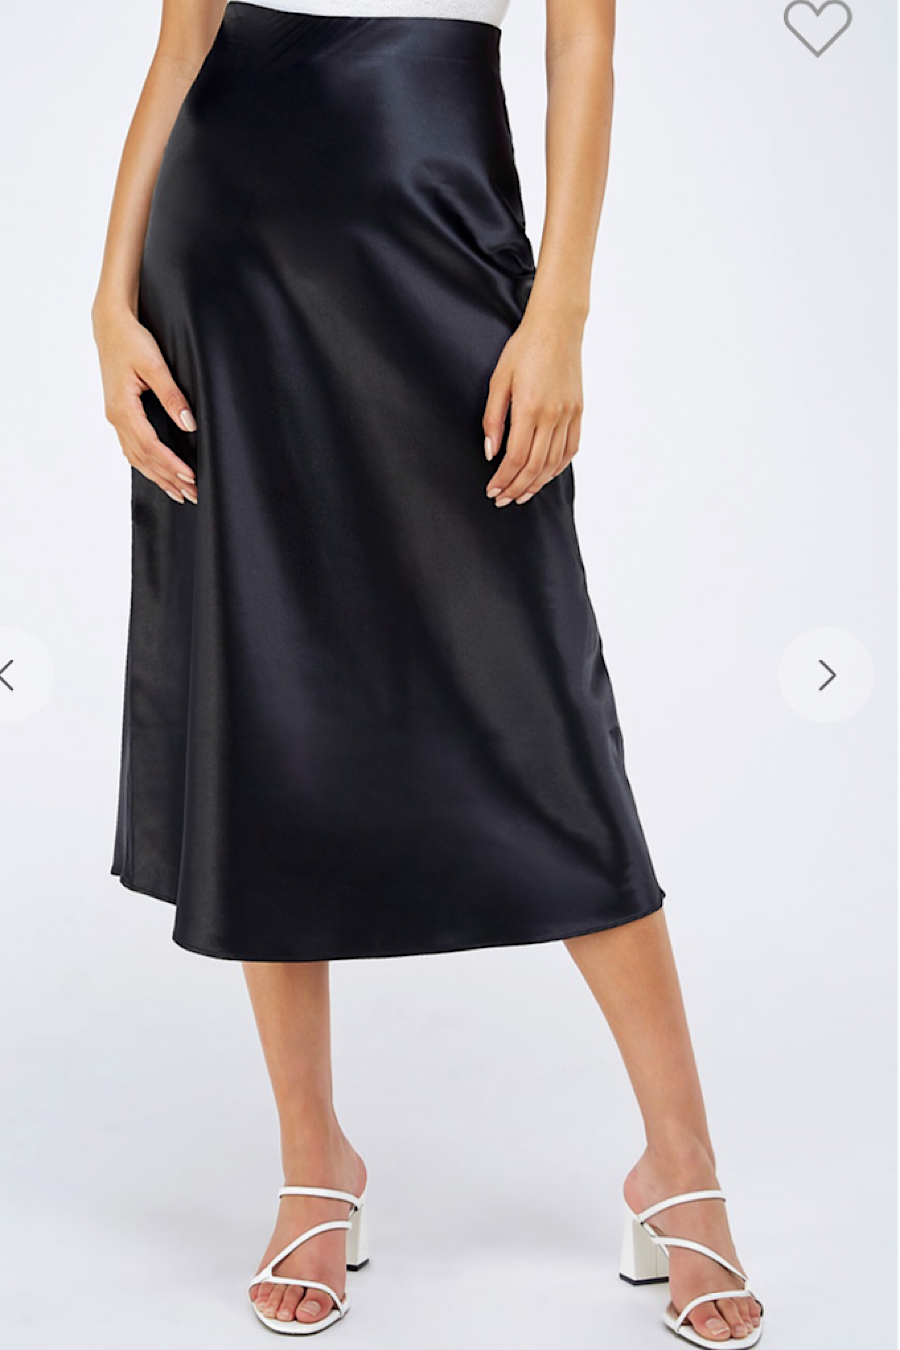 This is Love Satin Midi Skirt in Black